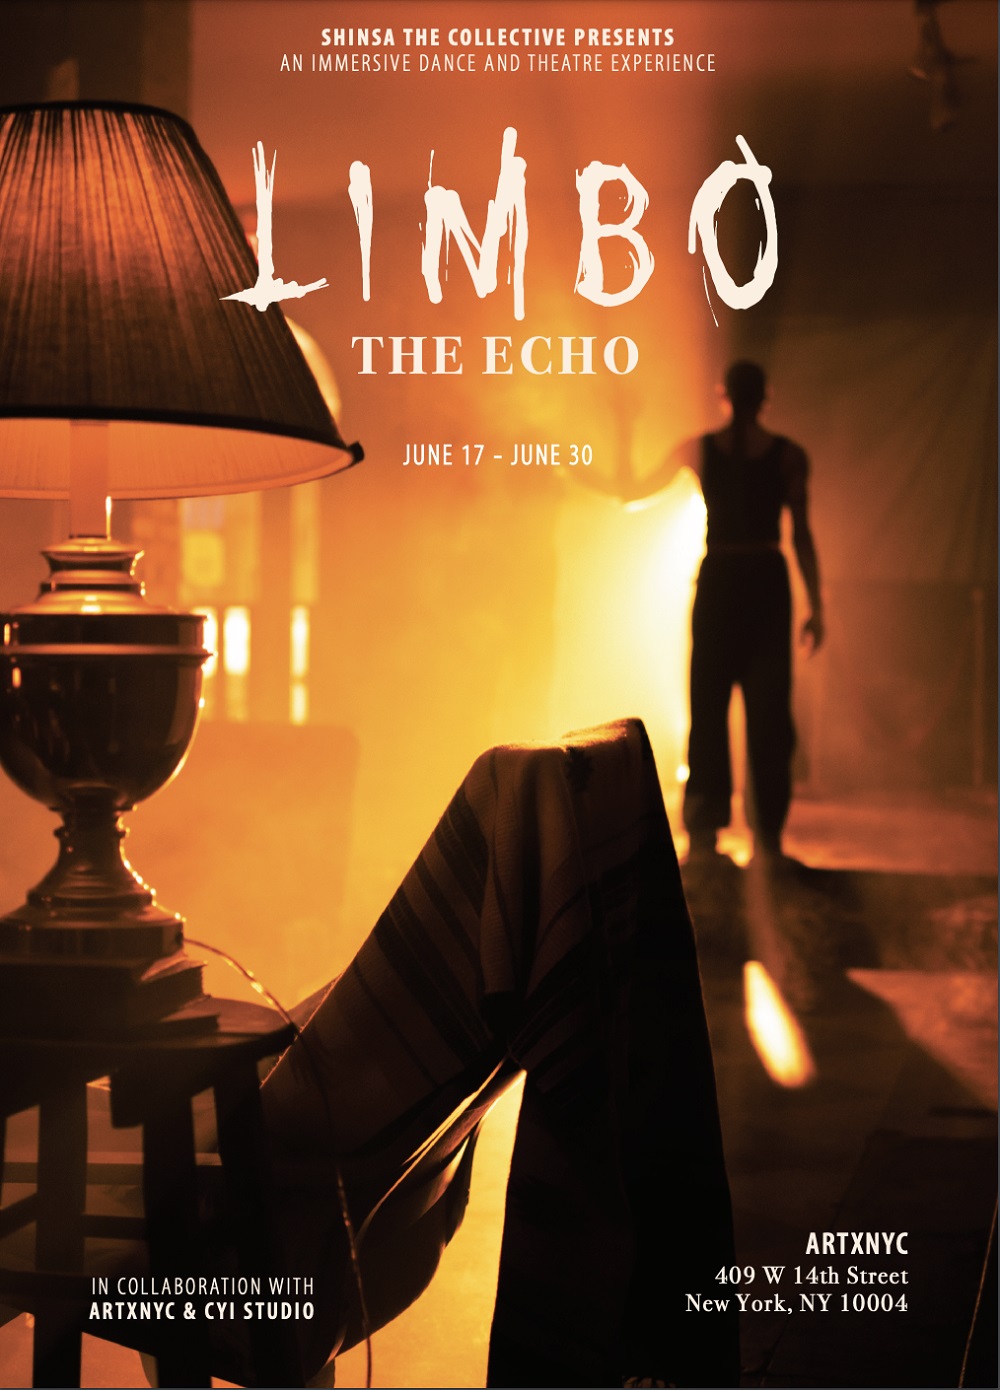 Shinsa the Collective presents LIMBO: The Echo